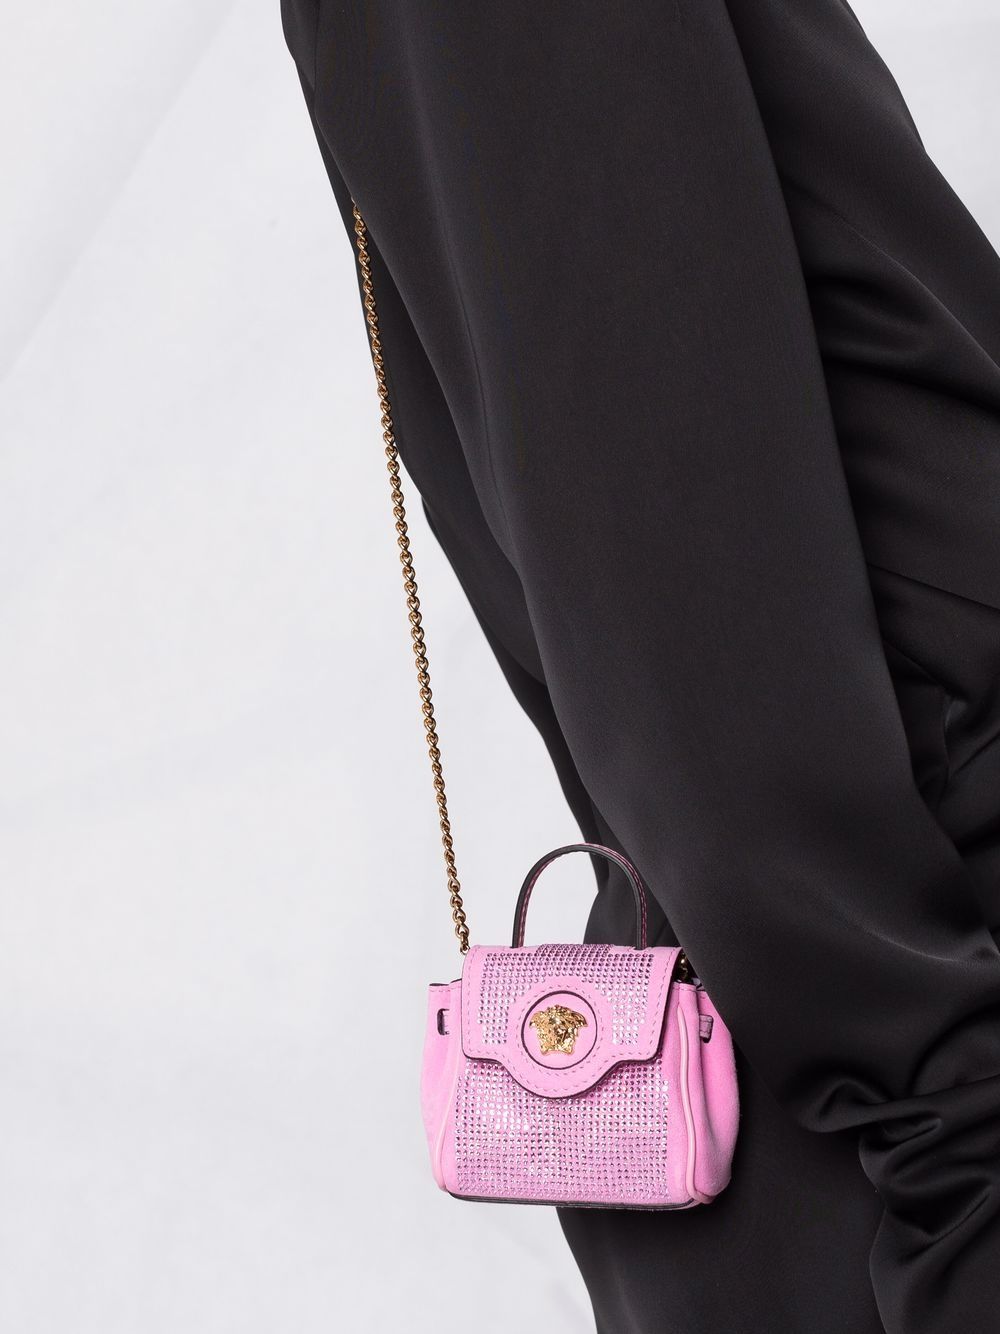 Versace Medusa Strass Top Handle Bag In Baby Pink & Oro | ModeSens